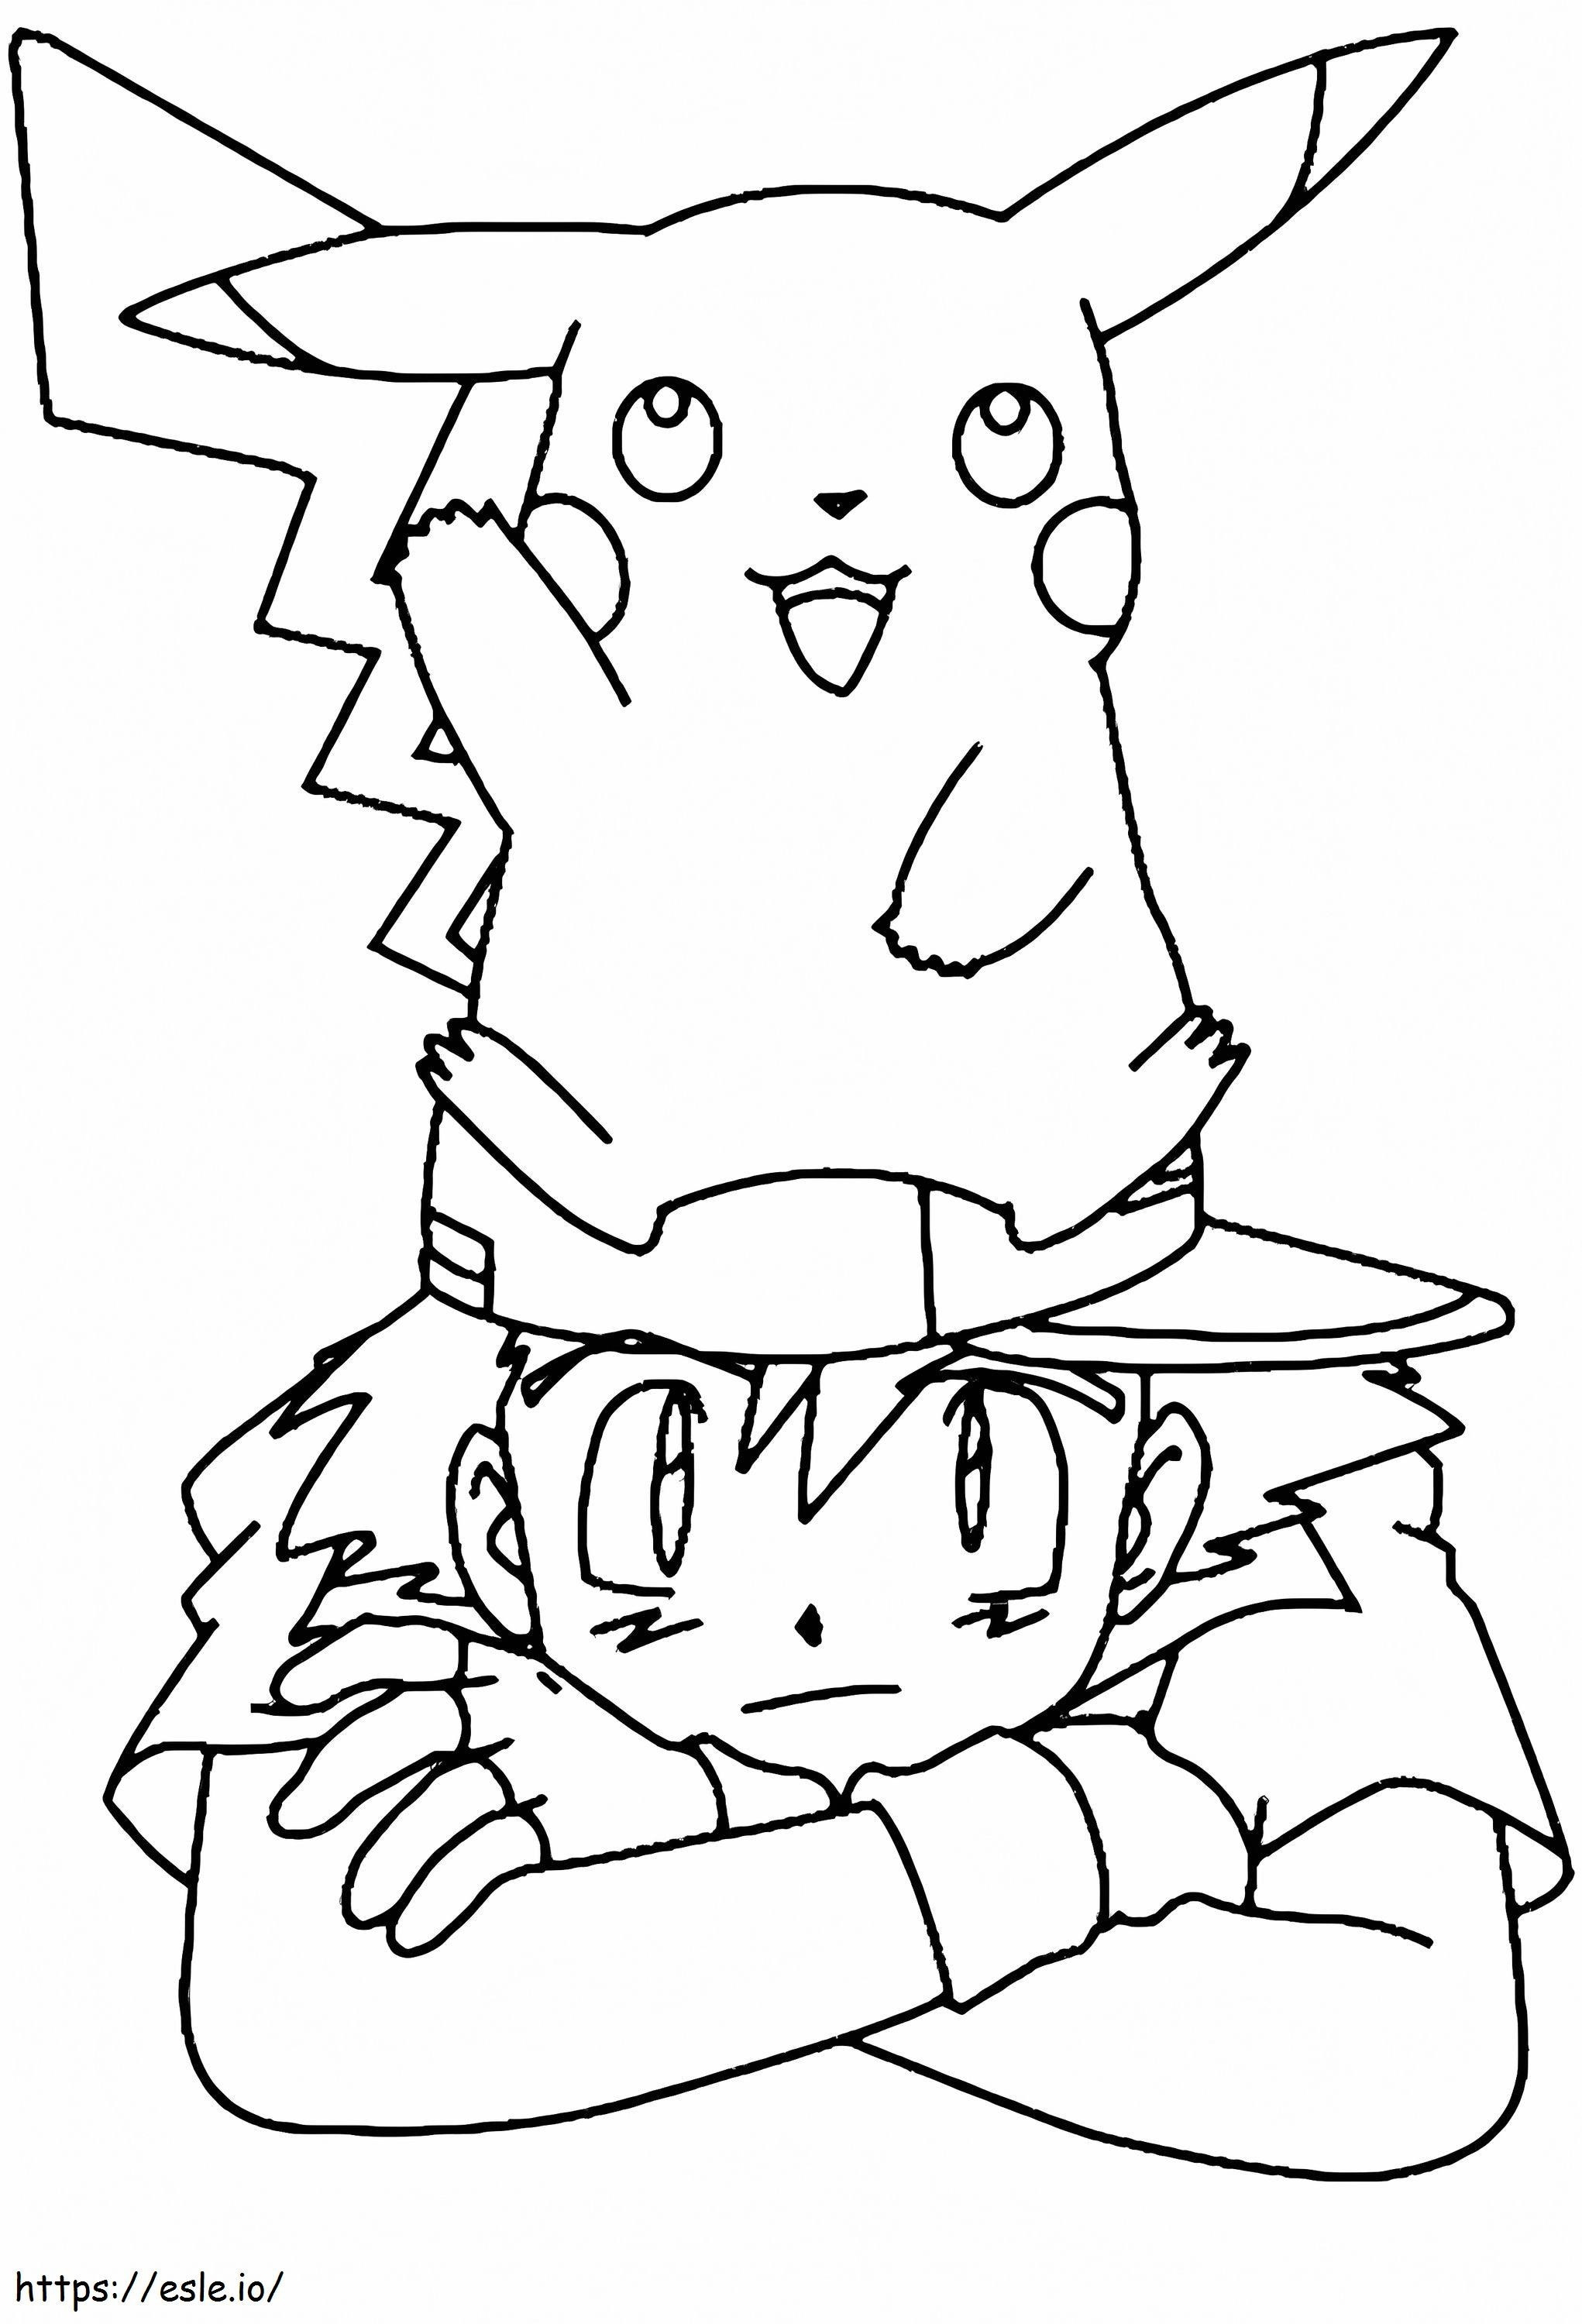 Pikachu Sitting On Satoshi'S Head coloring page